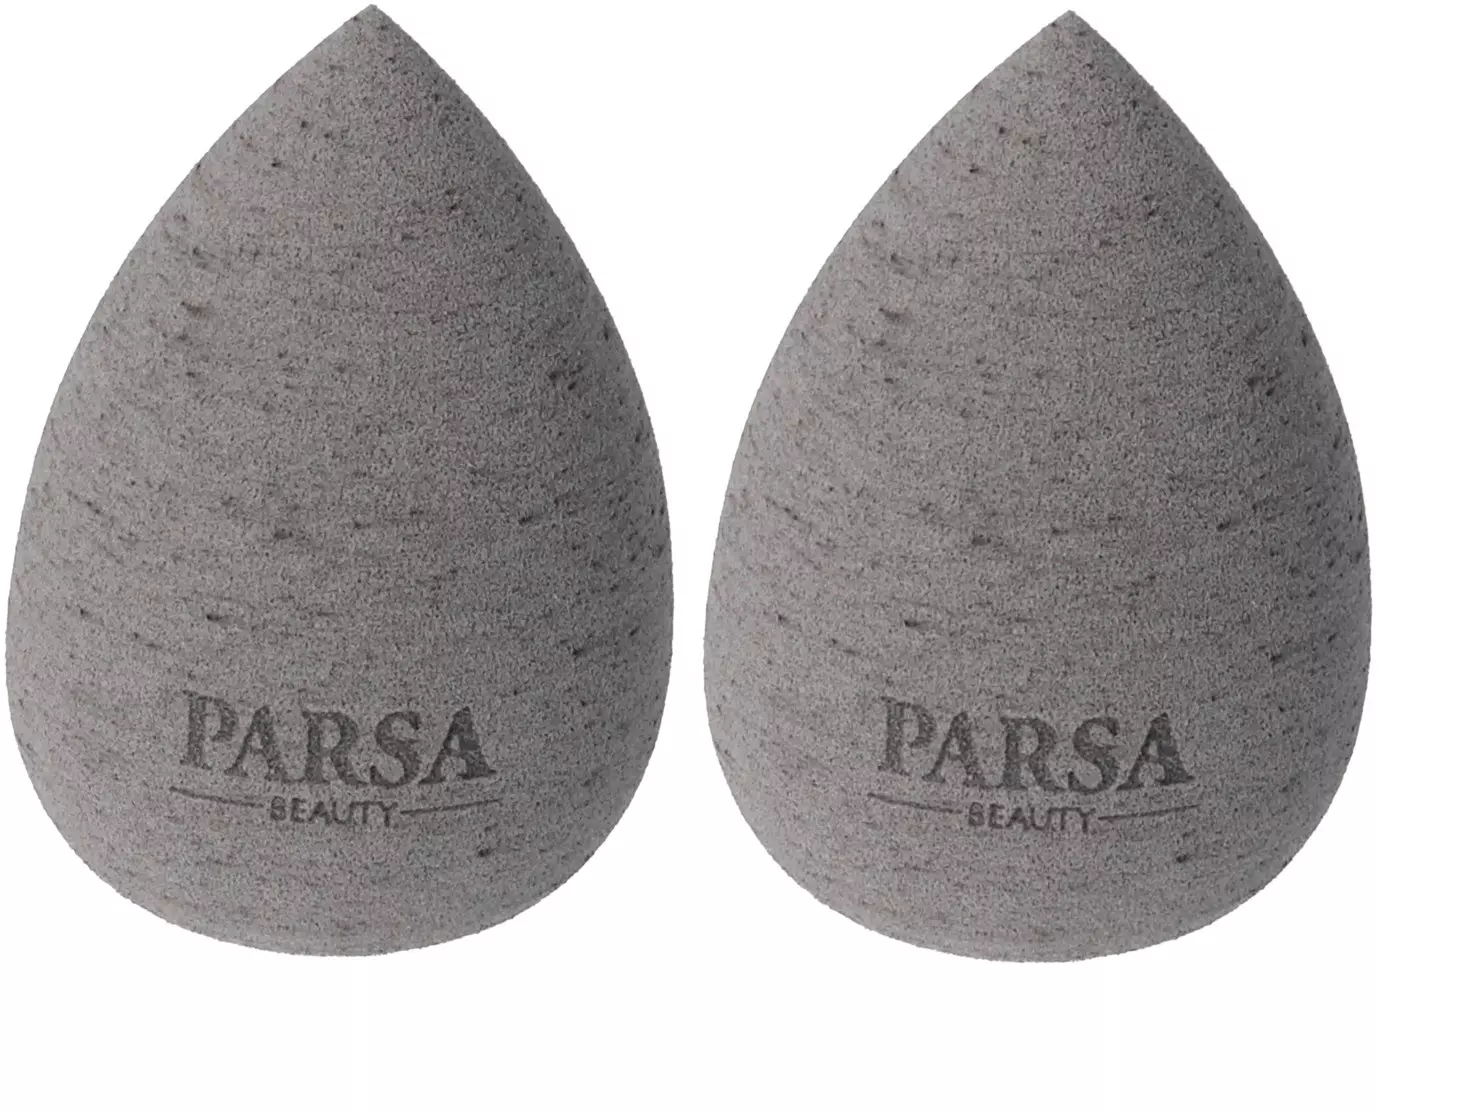 Parsa Beauty Make-Up Egg Coconut Grey